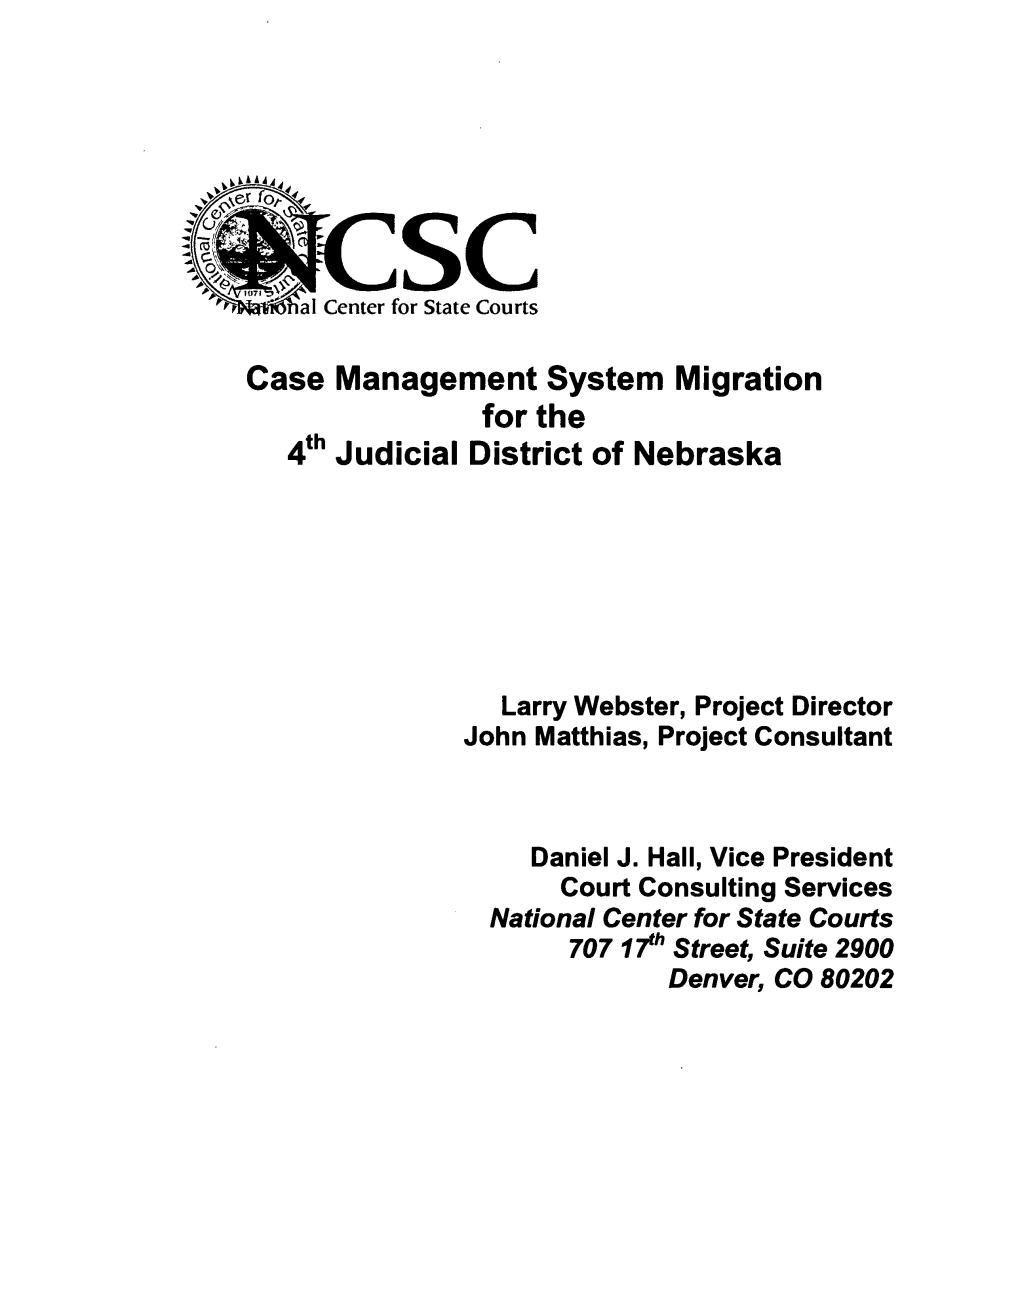 Case Management System Migration for the 4Th Judicial District of Nebraska